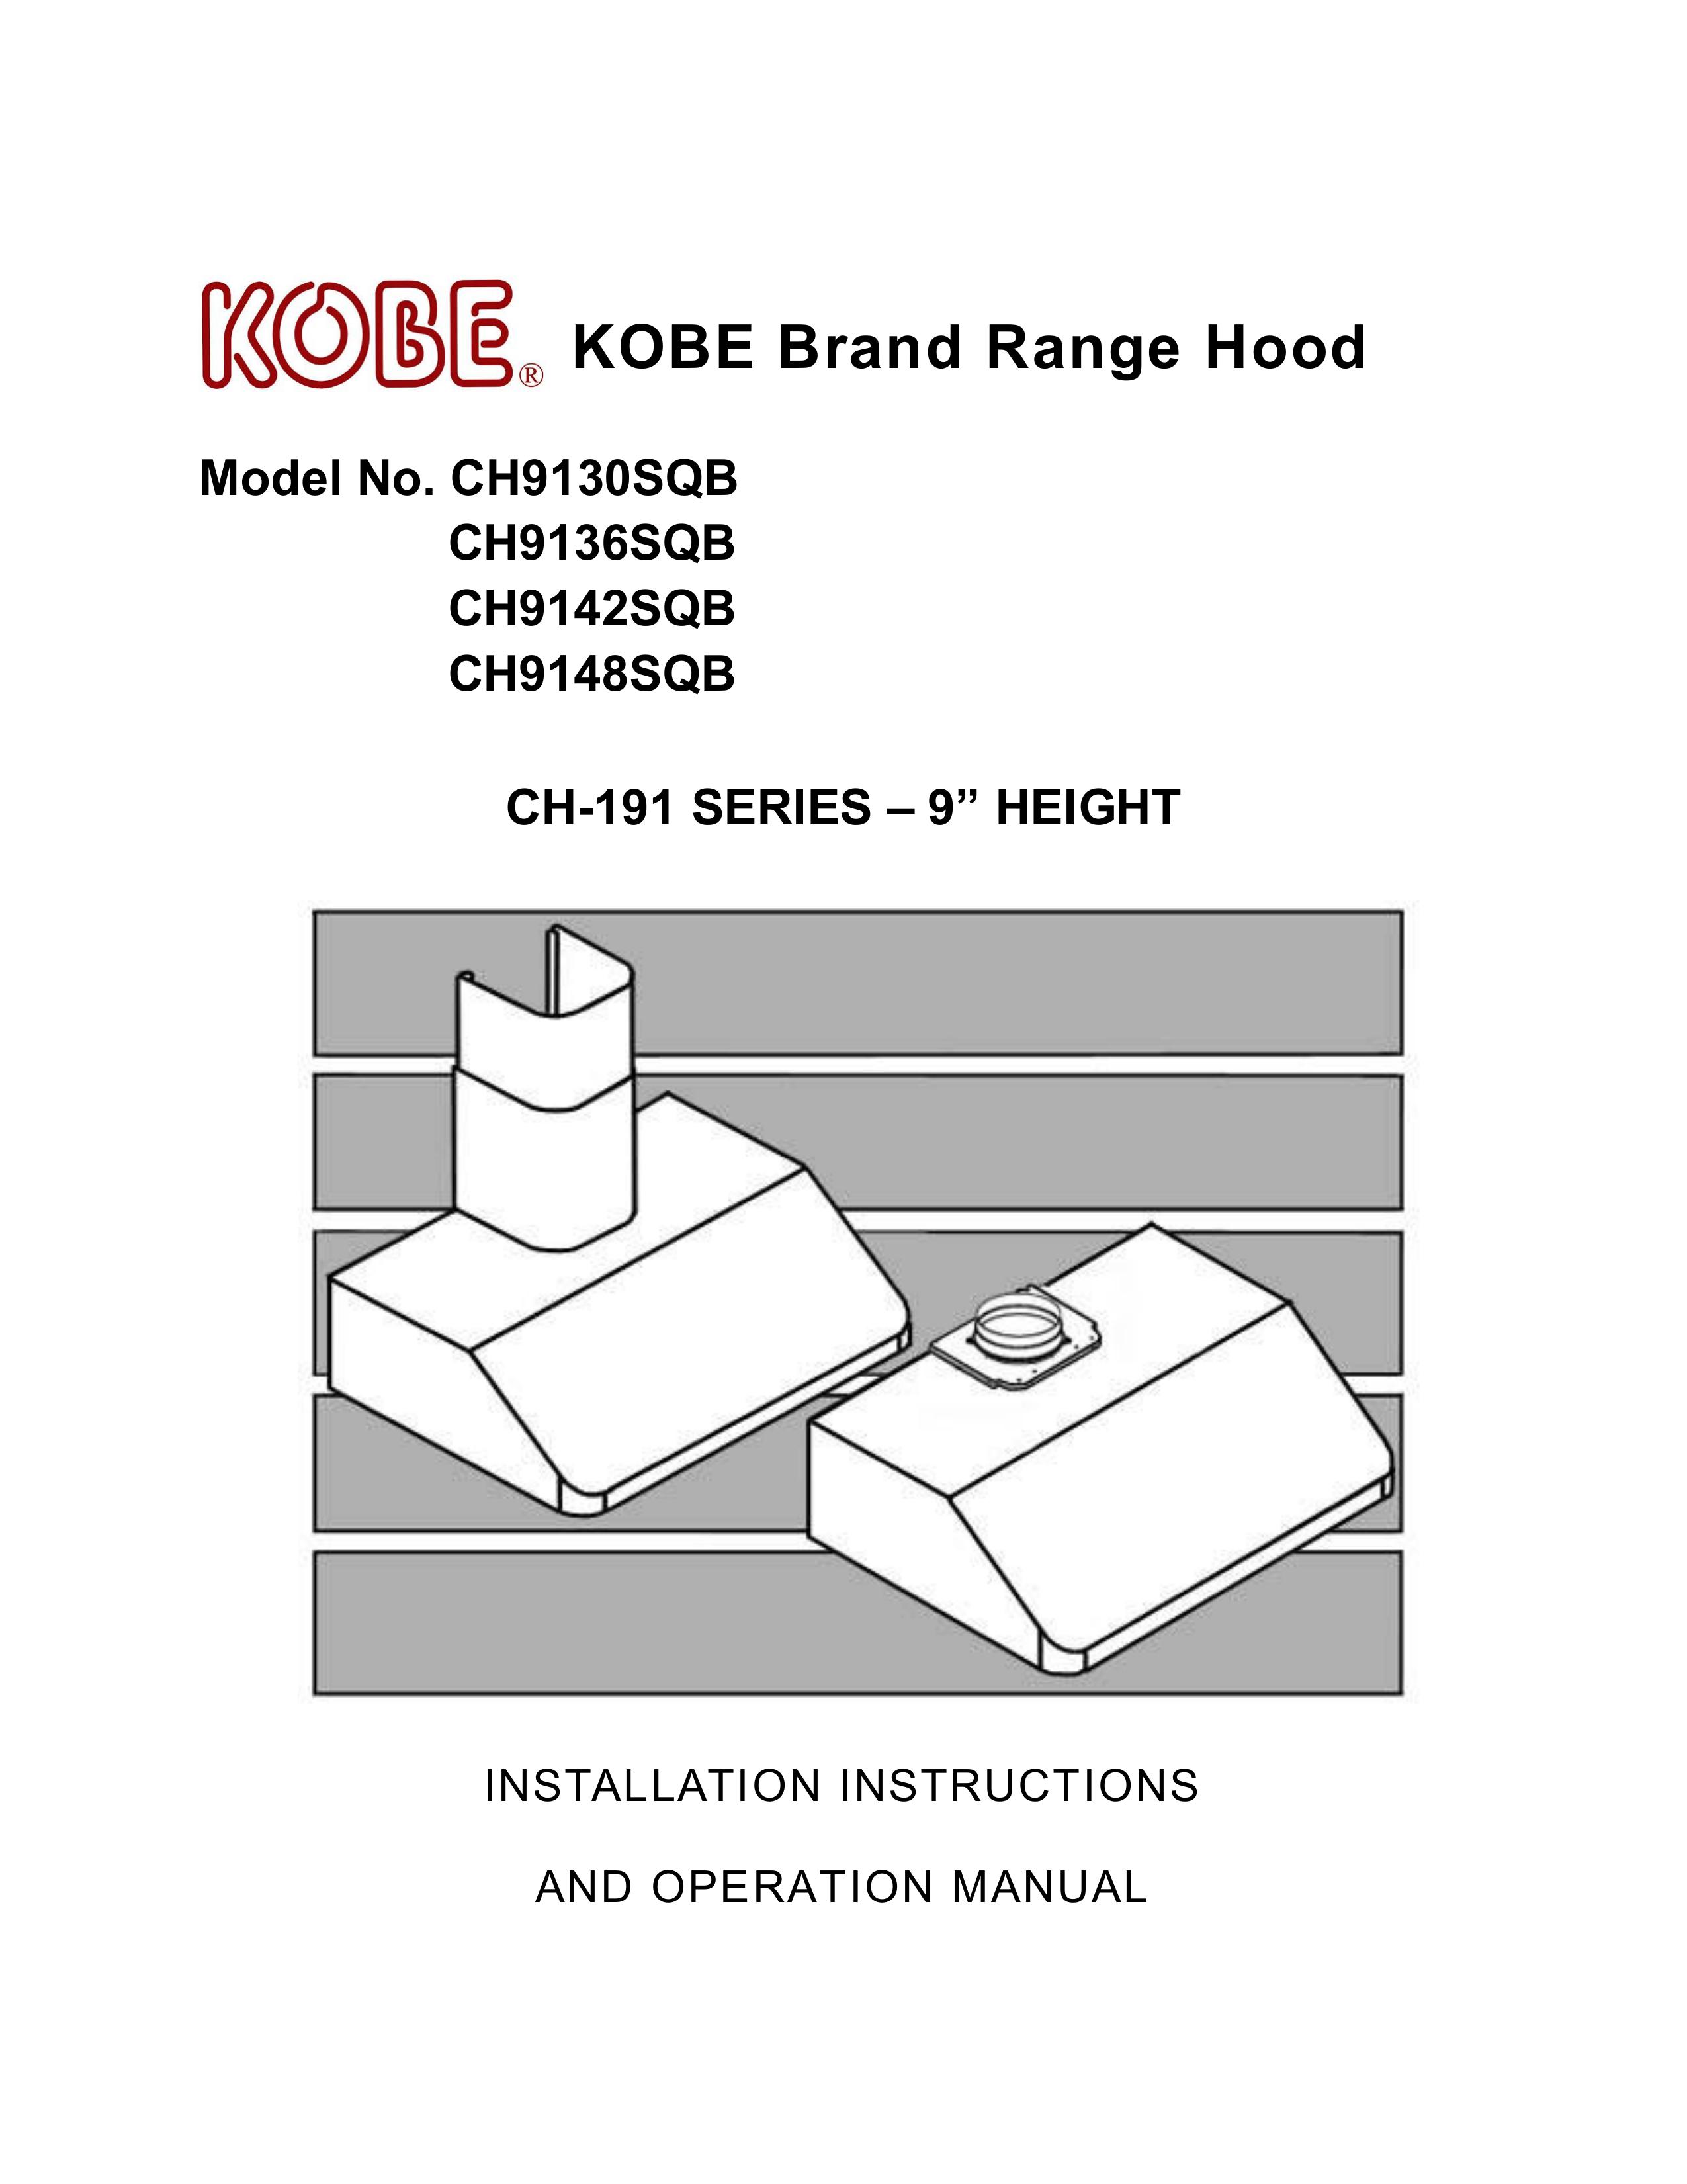 Kobe Range Hoods CH9142SQB Ventilation Hood User Manual